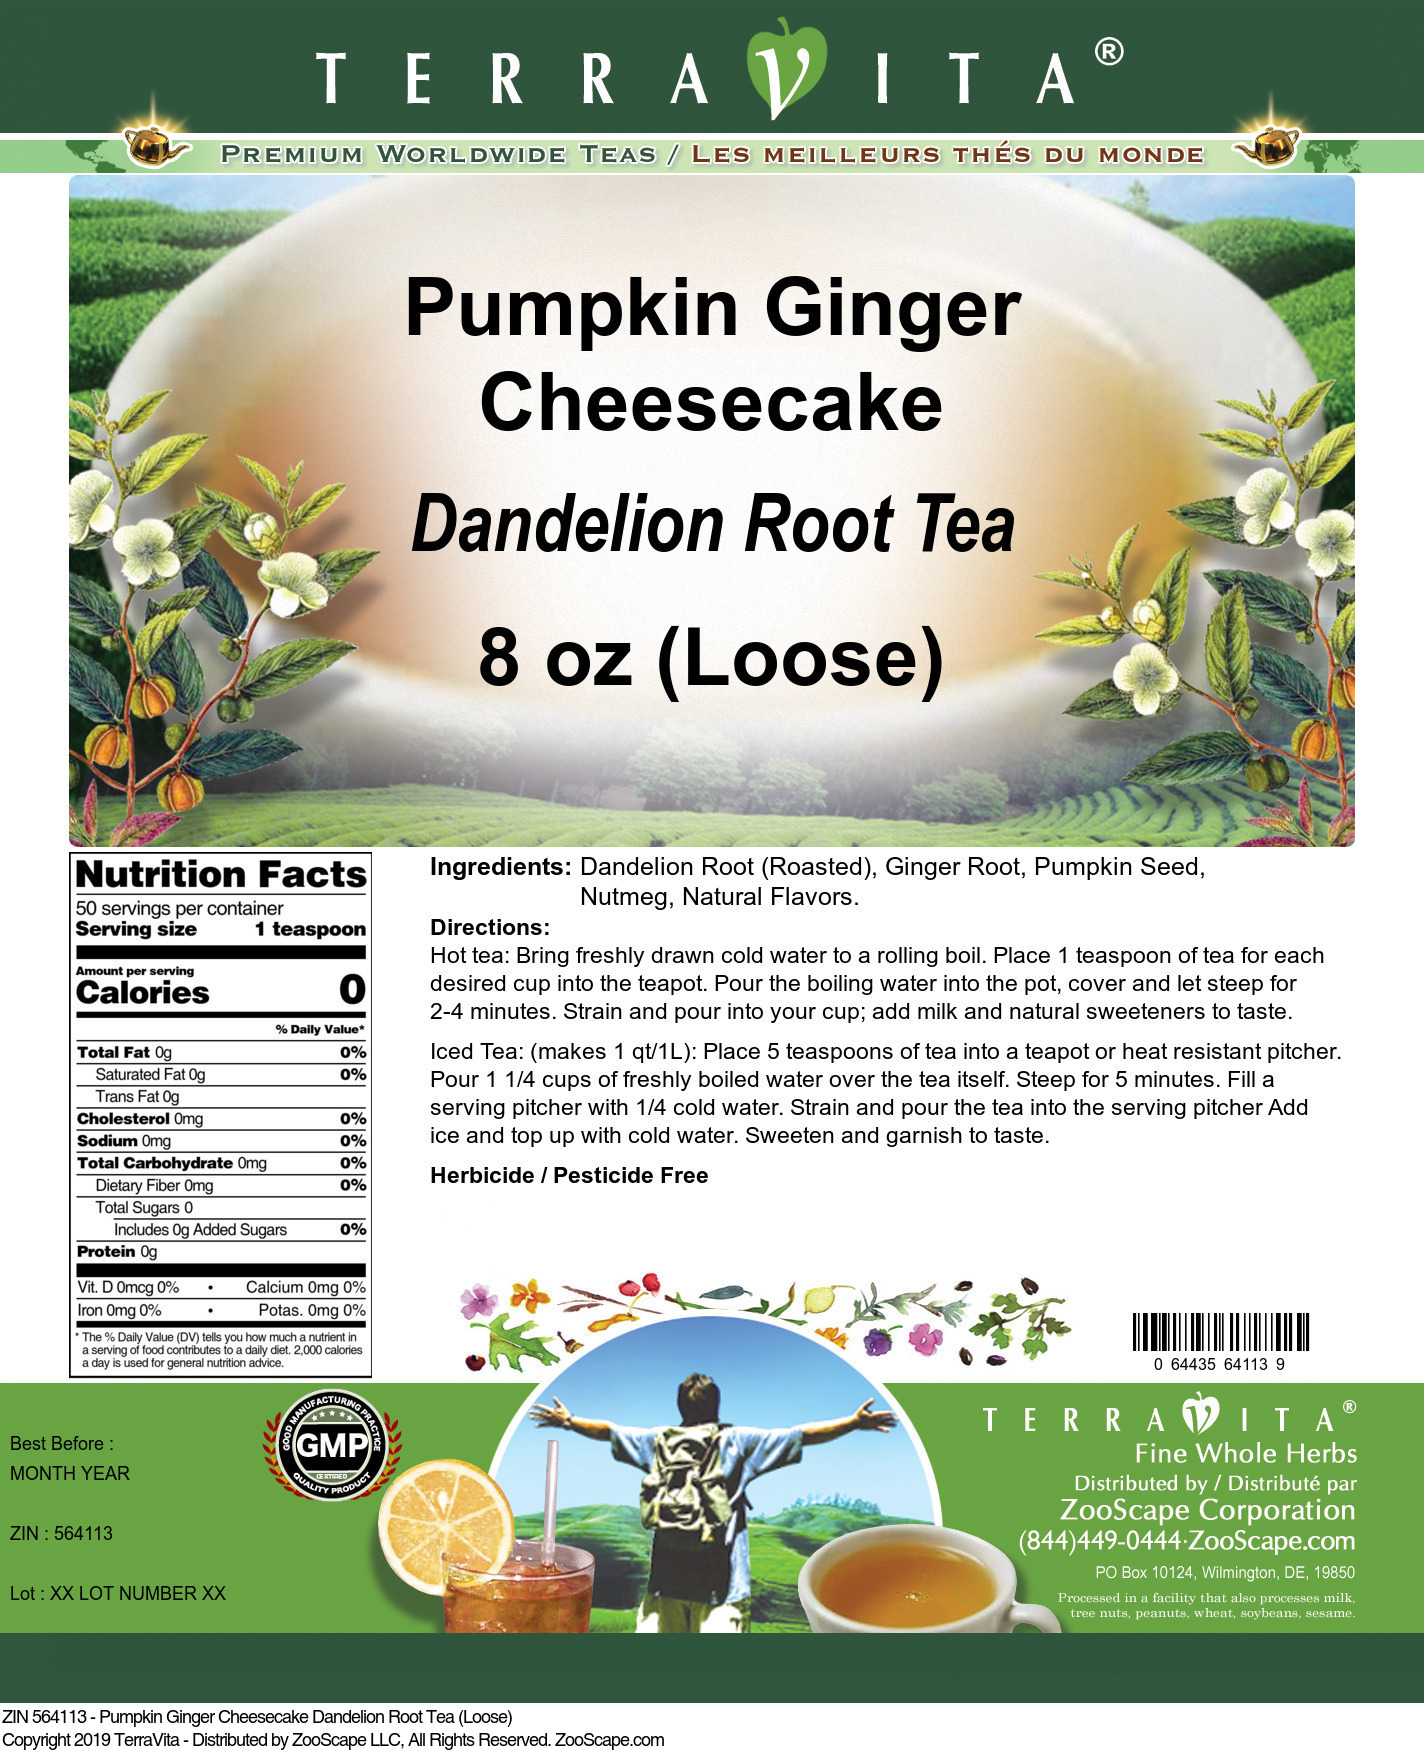 Pumpkin Ginger Cheesecake Dandelion Root Tea (Loose) - Label